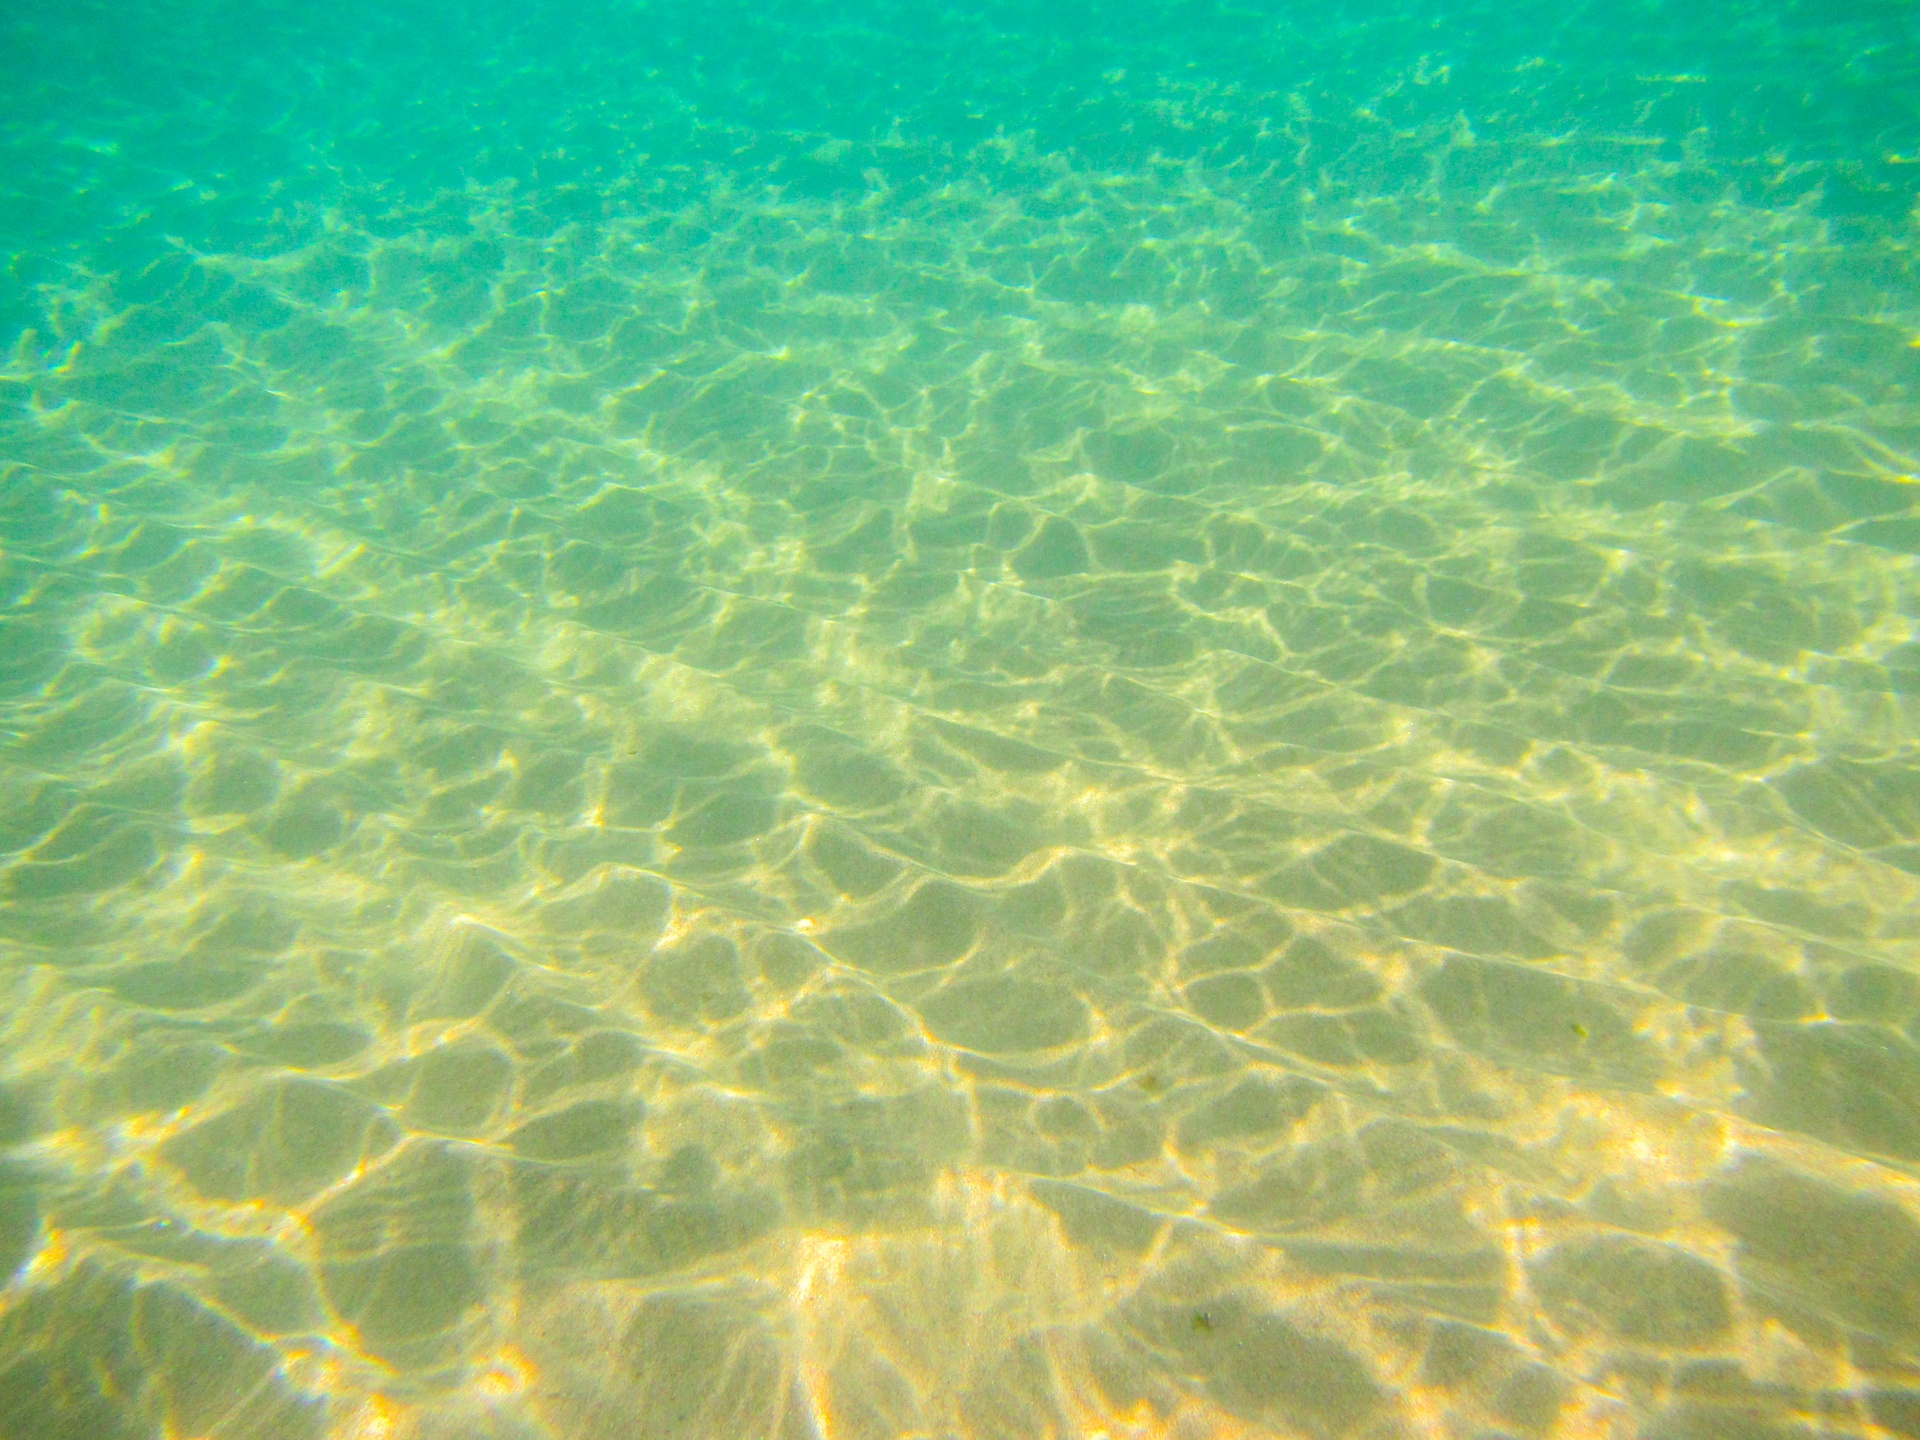 Seabed underwater background image